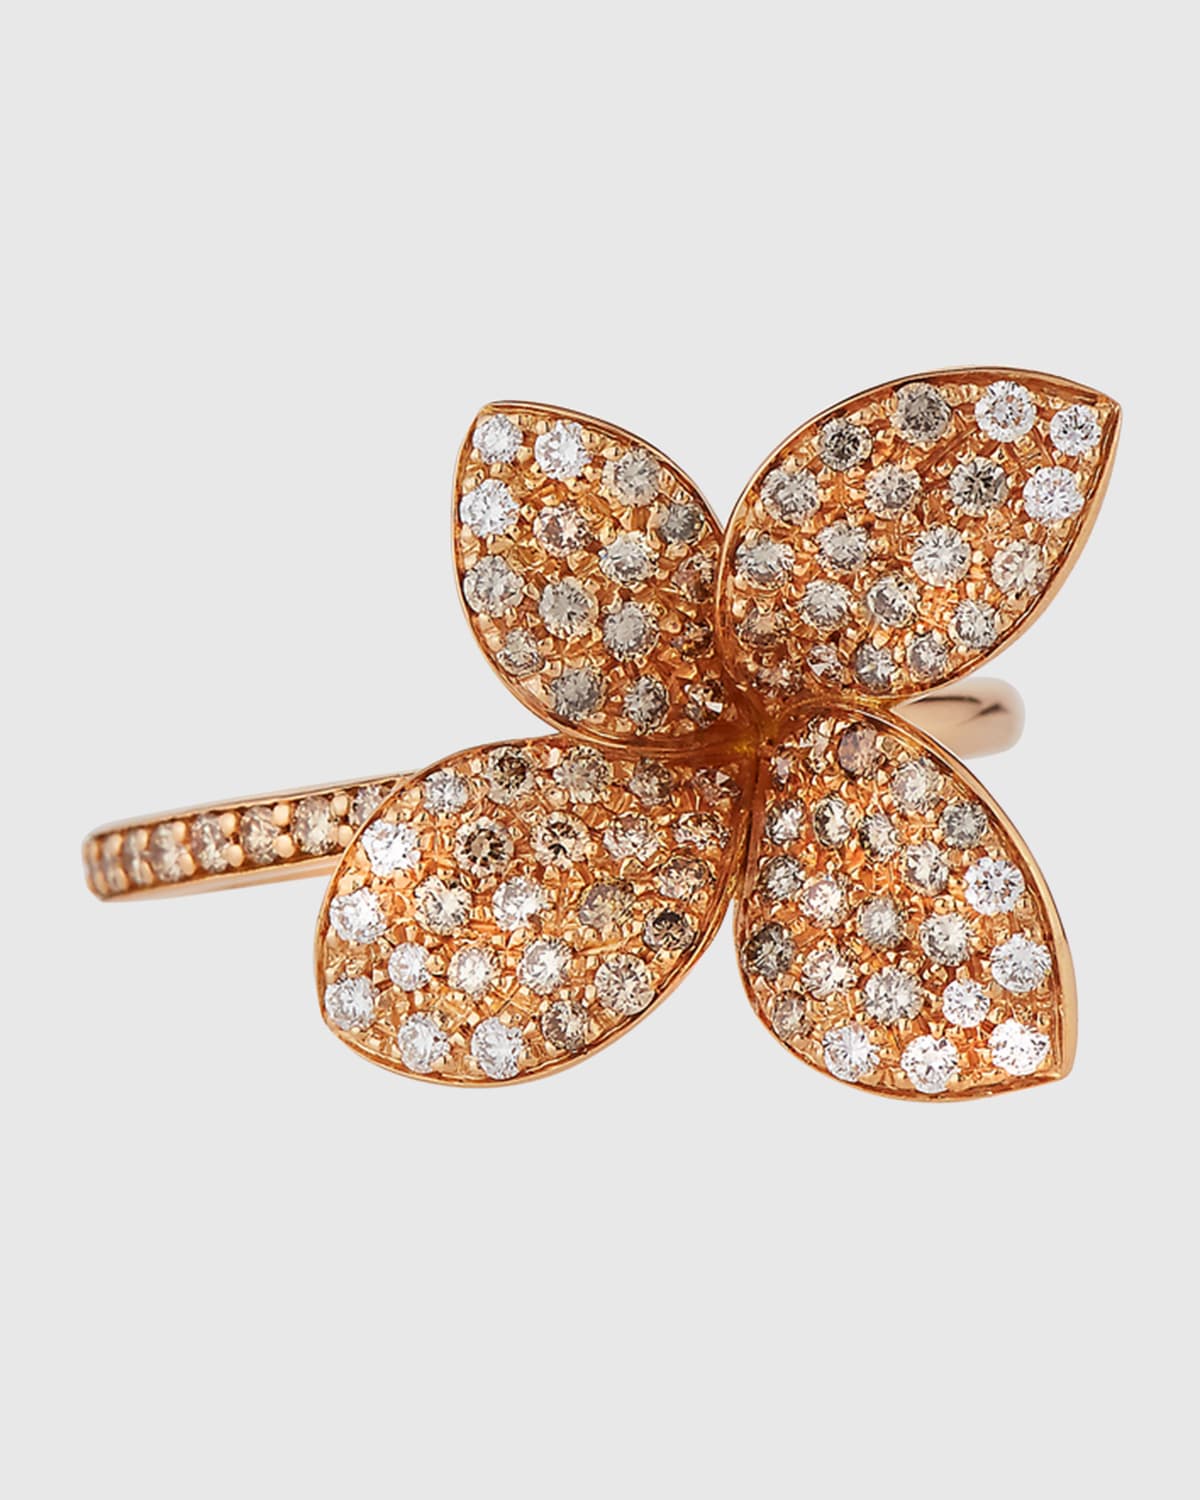 Giardini Segreti Petite Flower Ring with Diamonds in 18K Rose Gold, Size 5.75